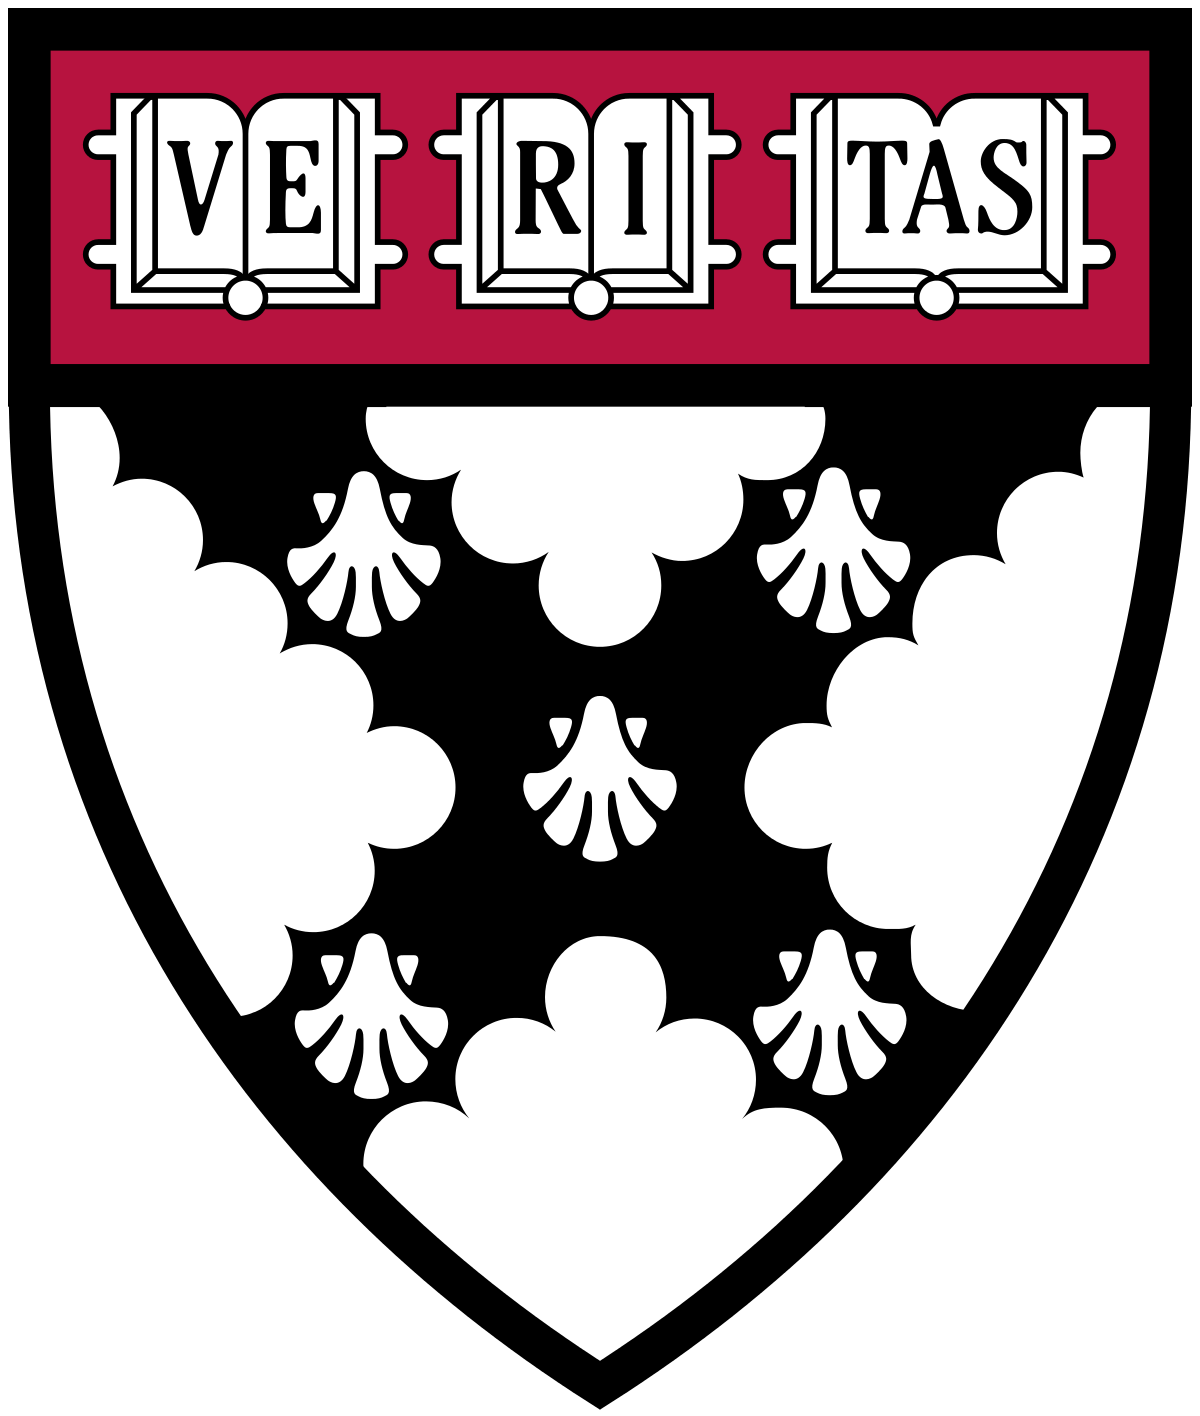 Harvard Business School Logo